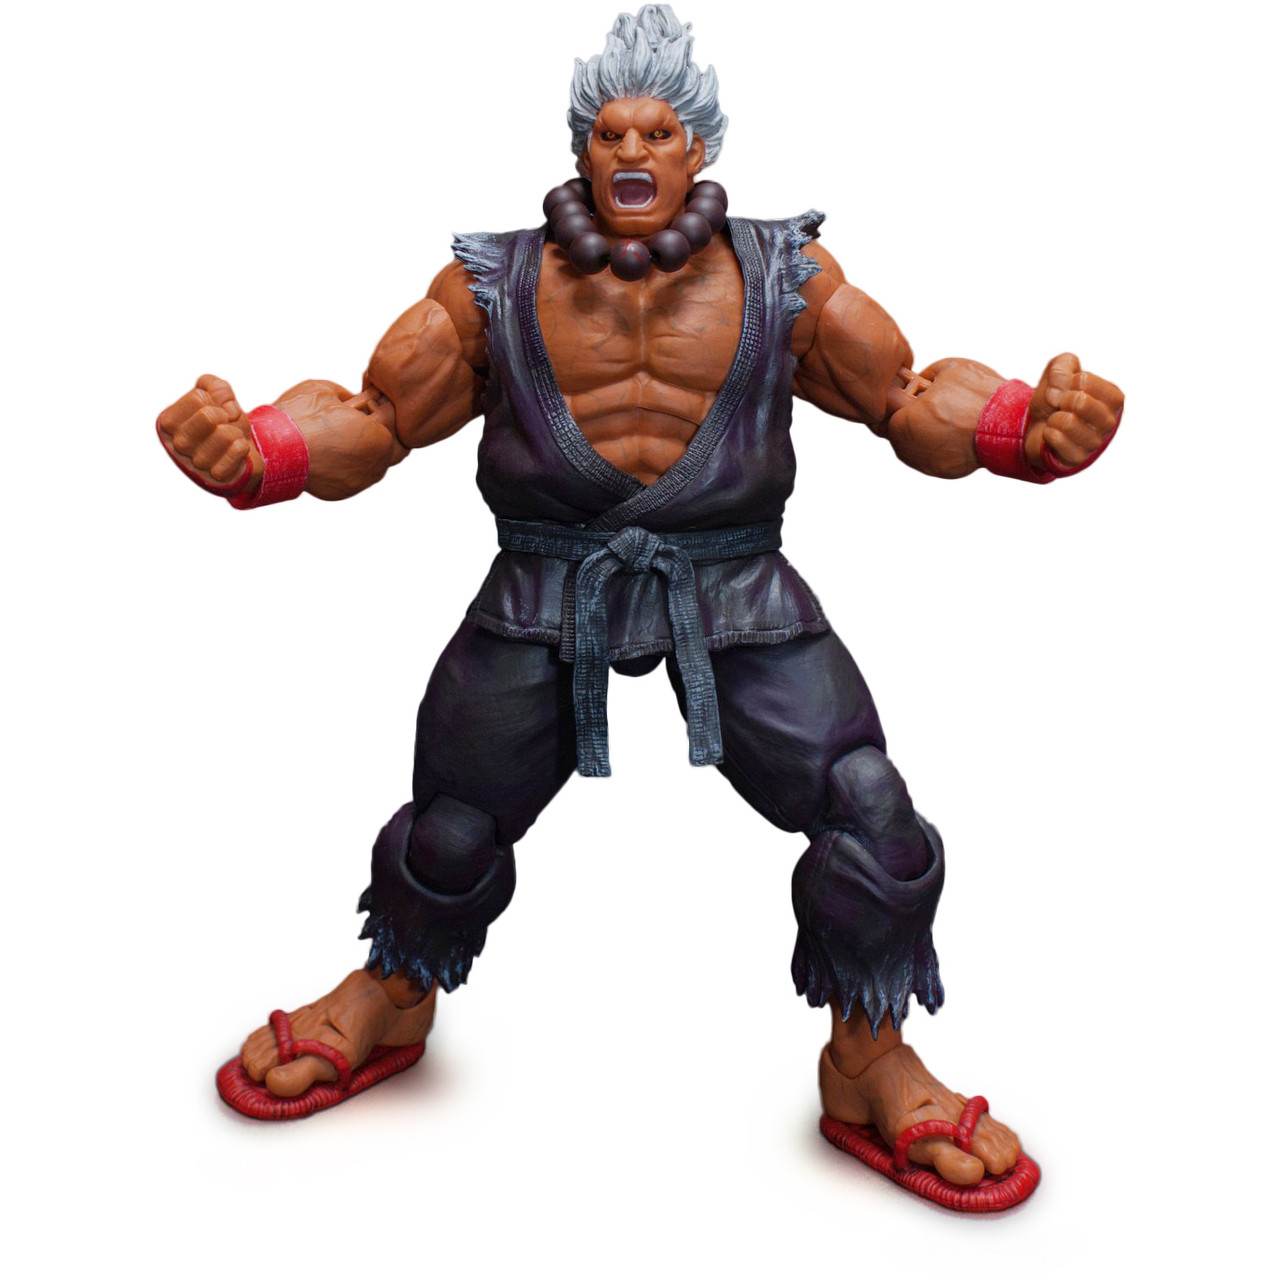 Street Fighter V Akuma 1:12 Action Figure